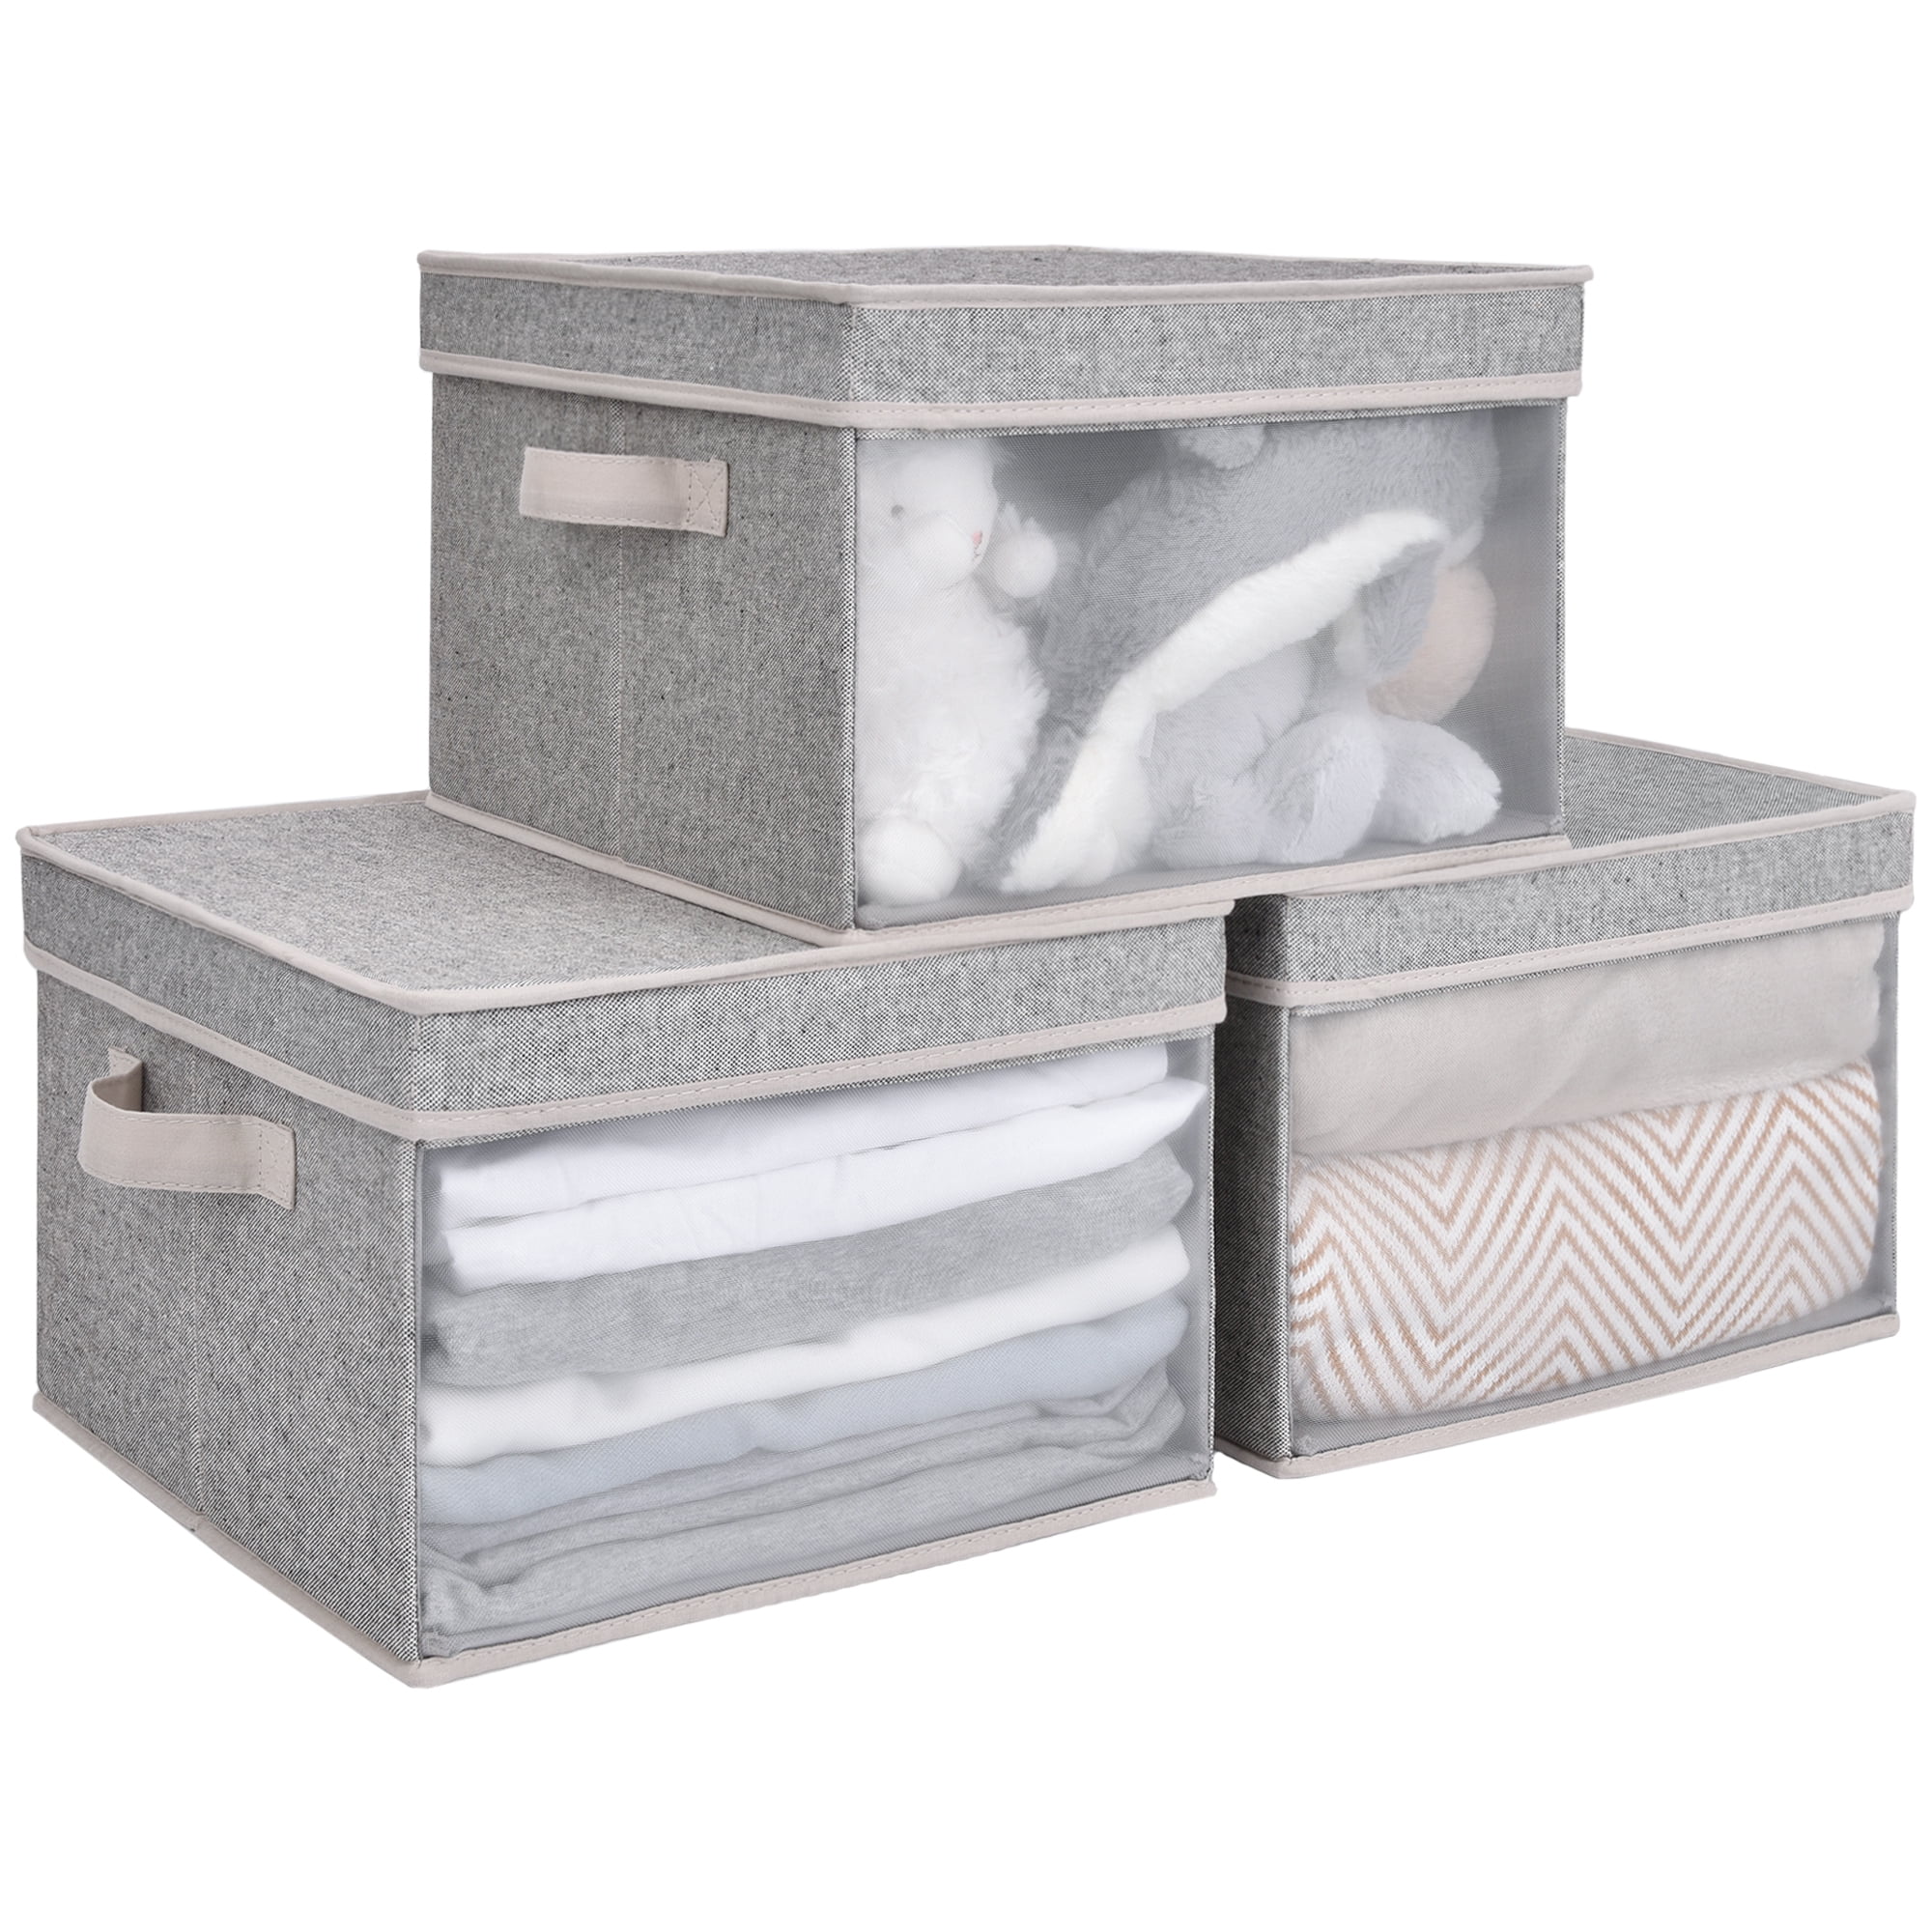 StorageWorks Trapezoid Storage Bins, Fabric Baskets for Closet Shelf, Foldable Closet Organizer with Handles, 3-Pack, 19.70'' x 11.20'' x 8.30'', Gray